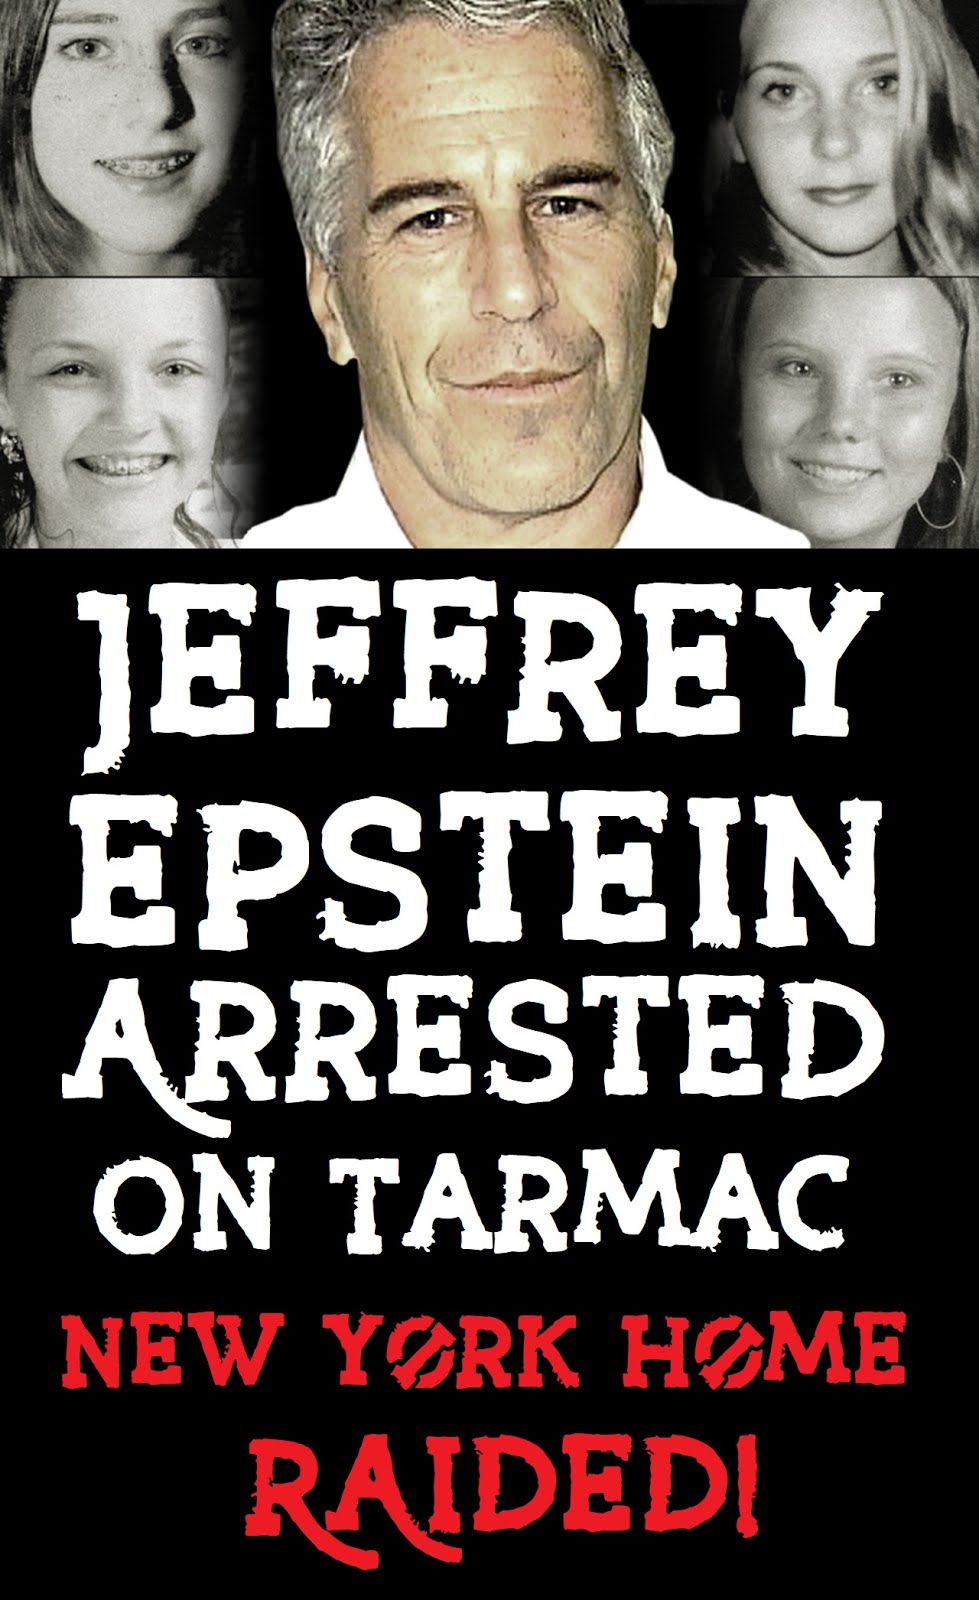 Epstein's New York Home; RAIDED!